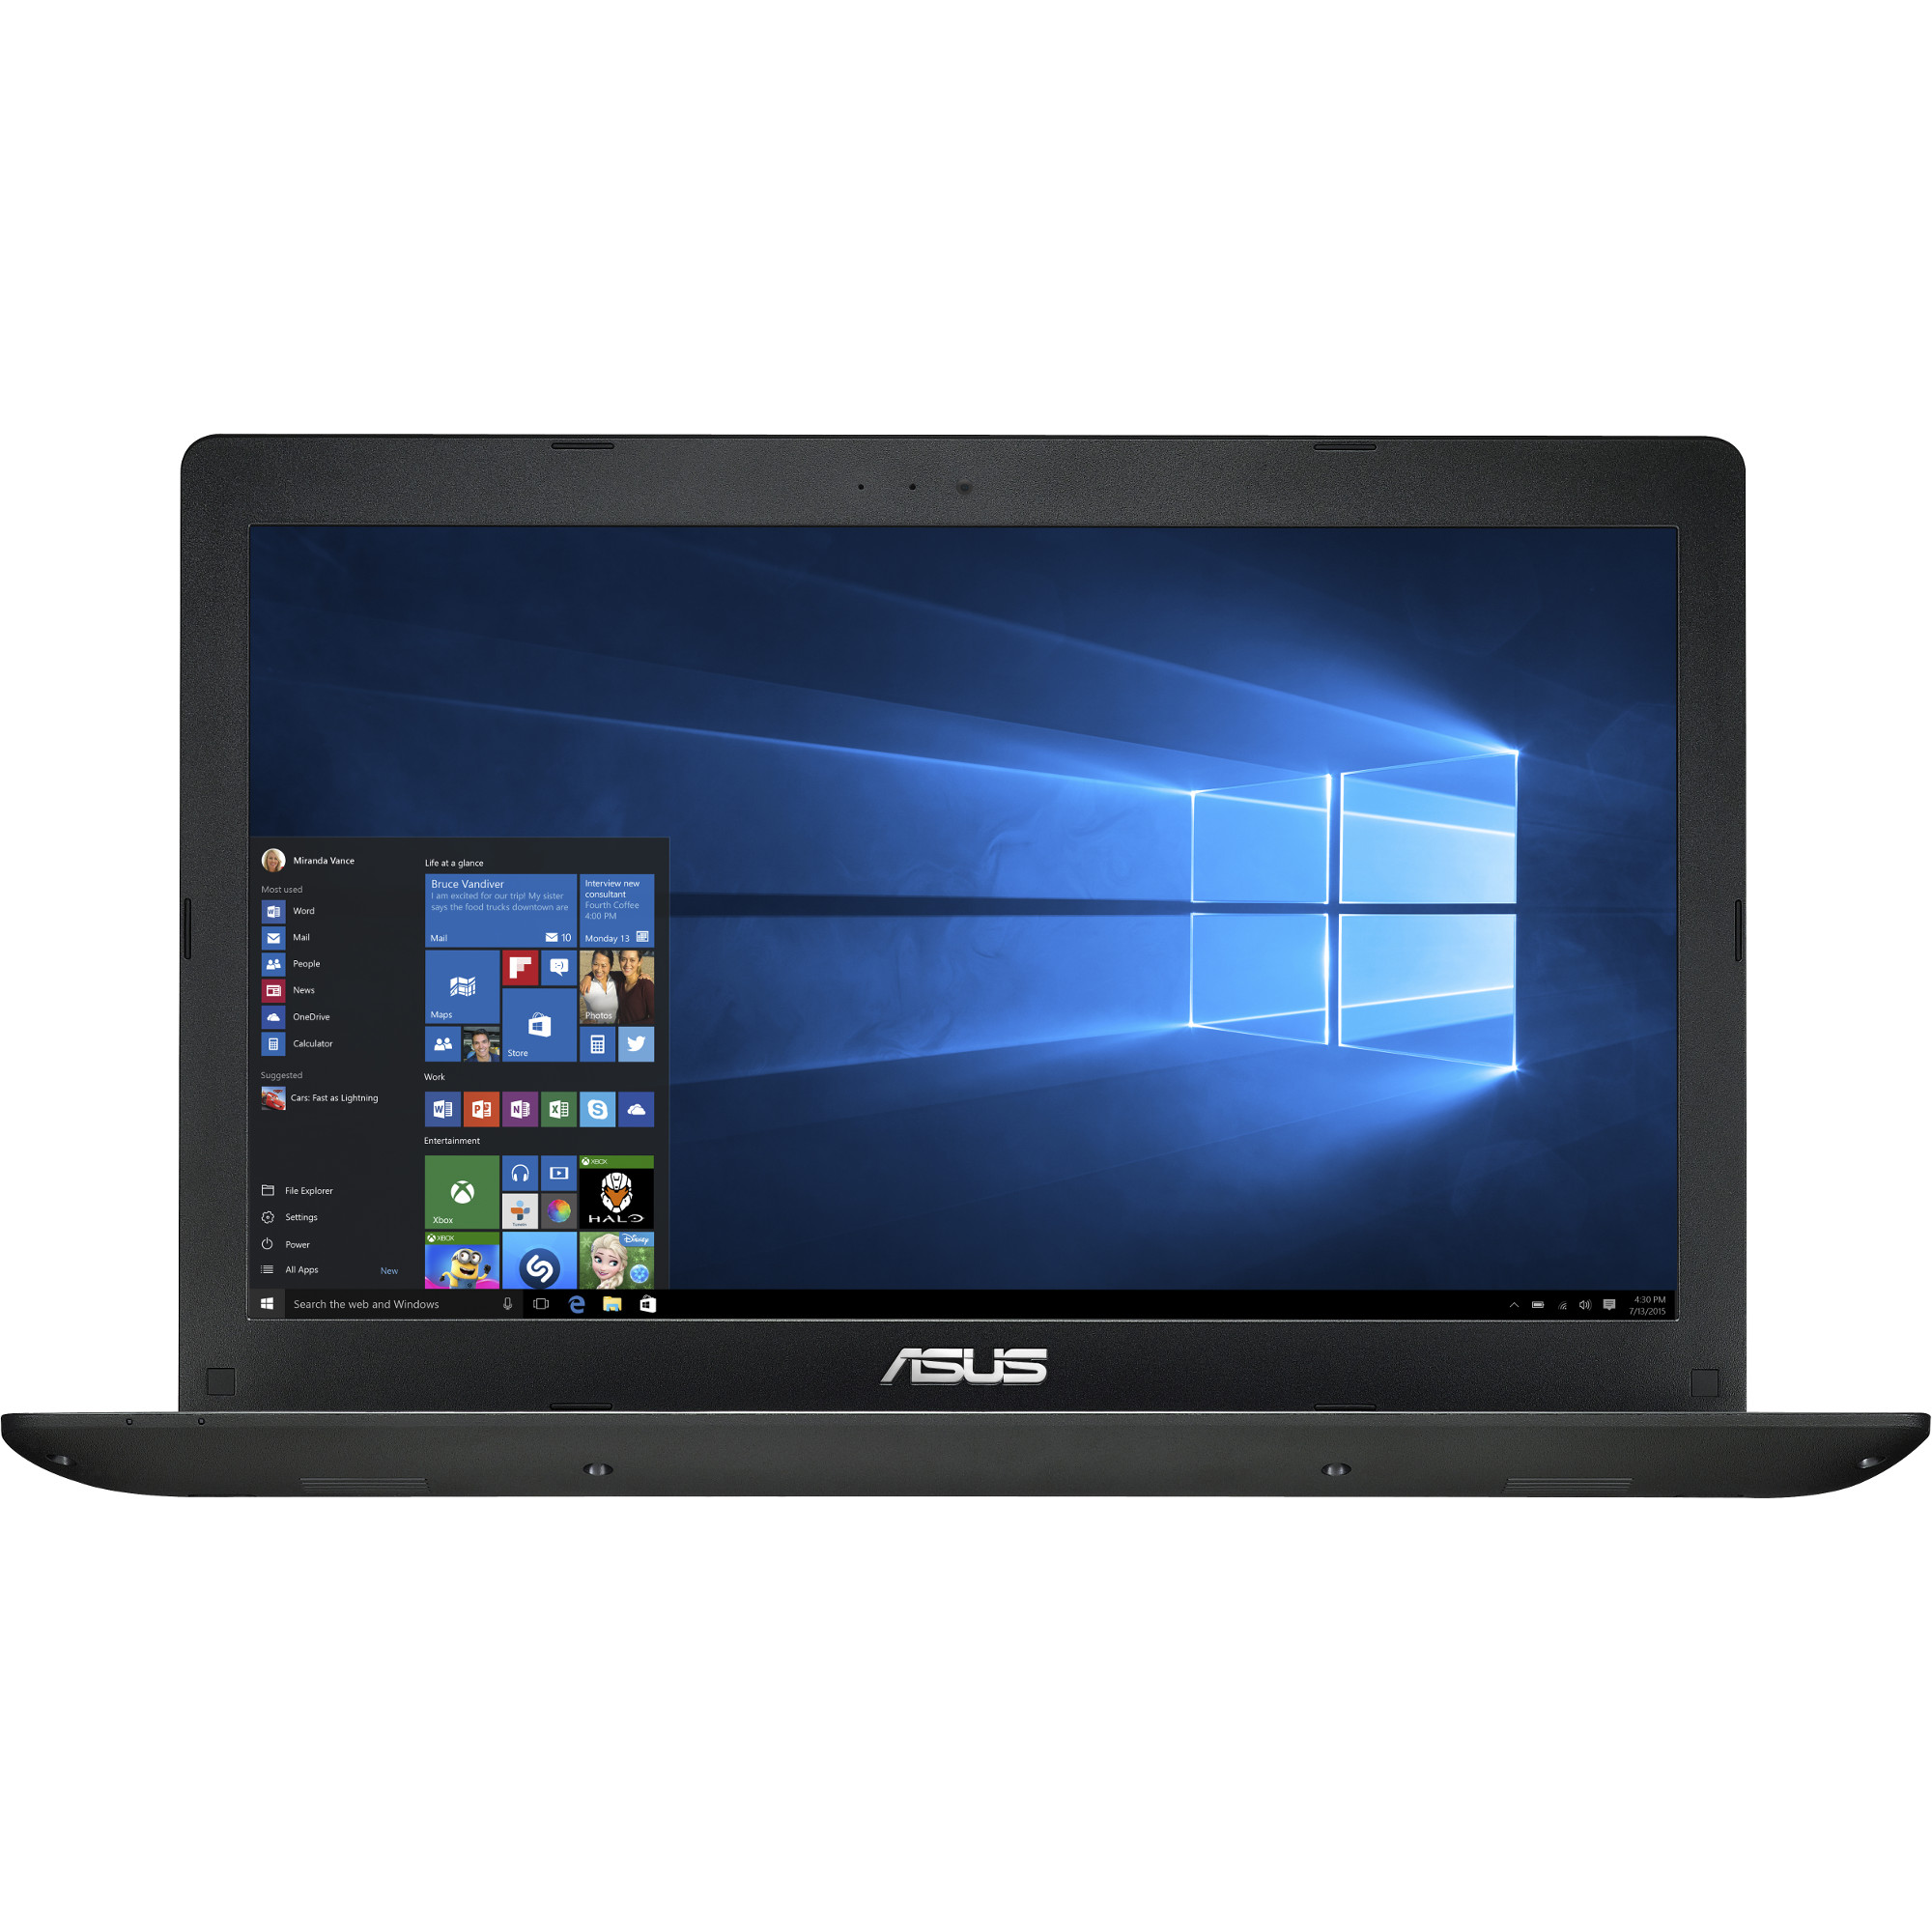  Laptop ASUS A553SA-XX049T, Intel Pentium N3700, 4GB DDR3, HDD 500GB, Intel HD Graphics, Windows 10 